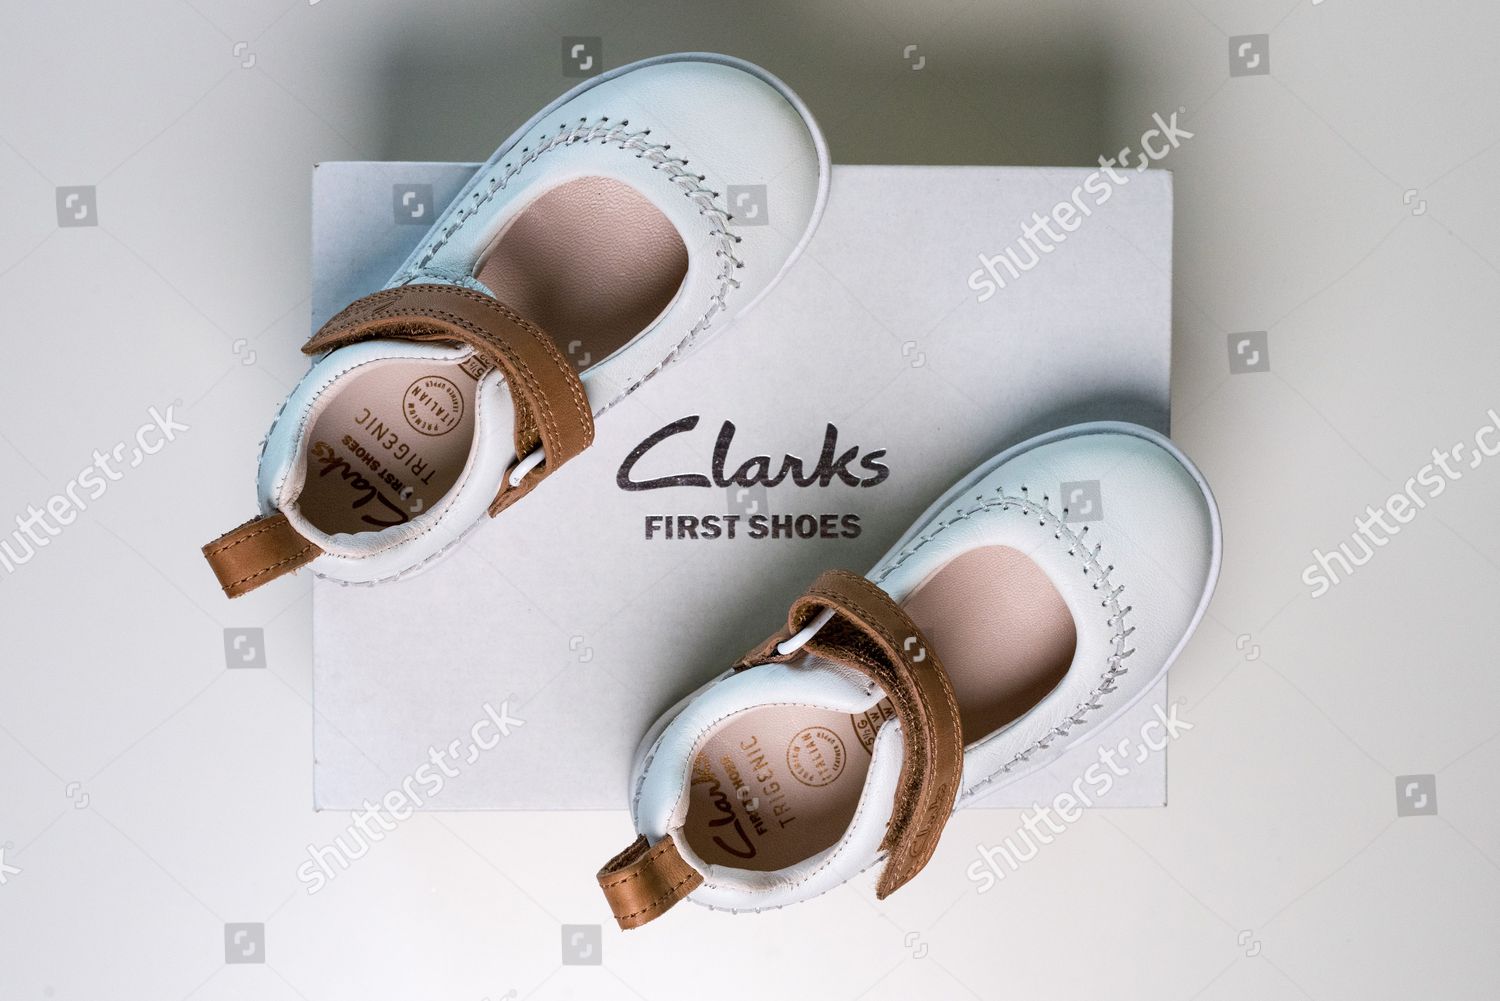 clarks shoes london uk